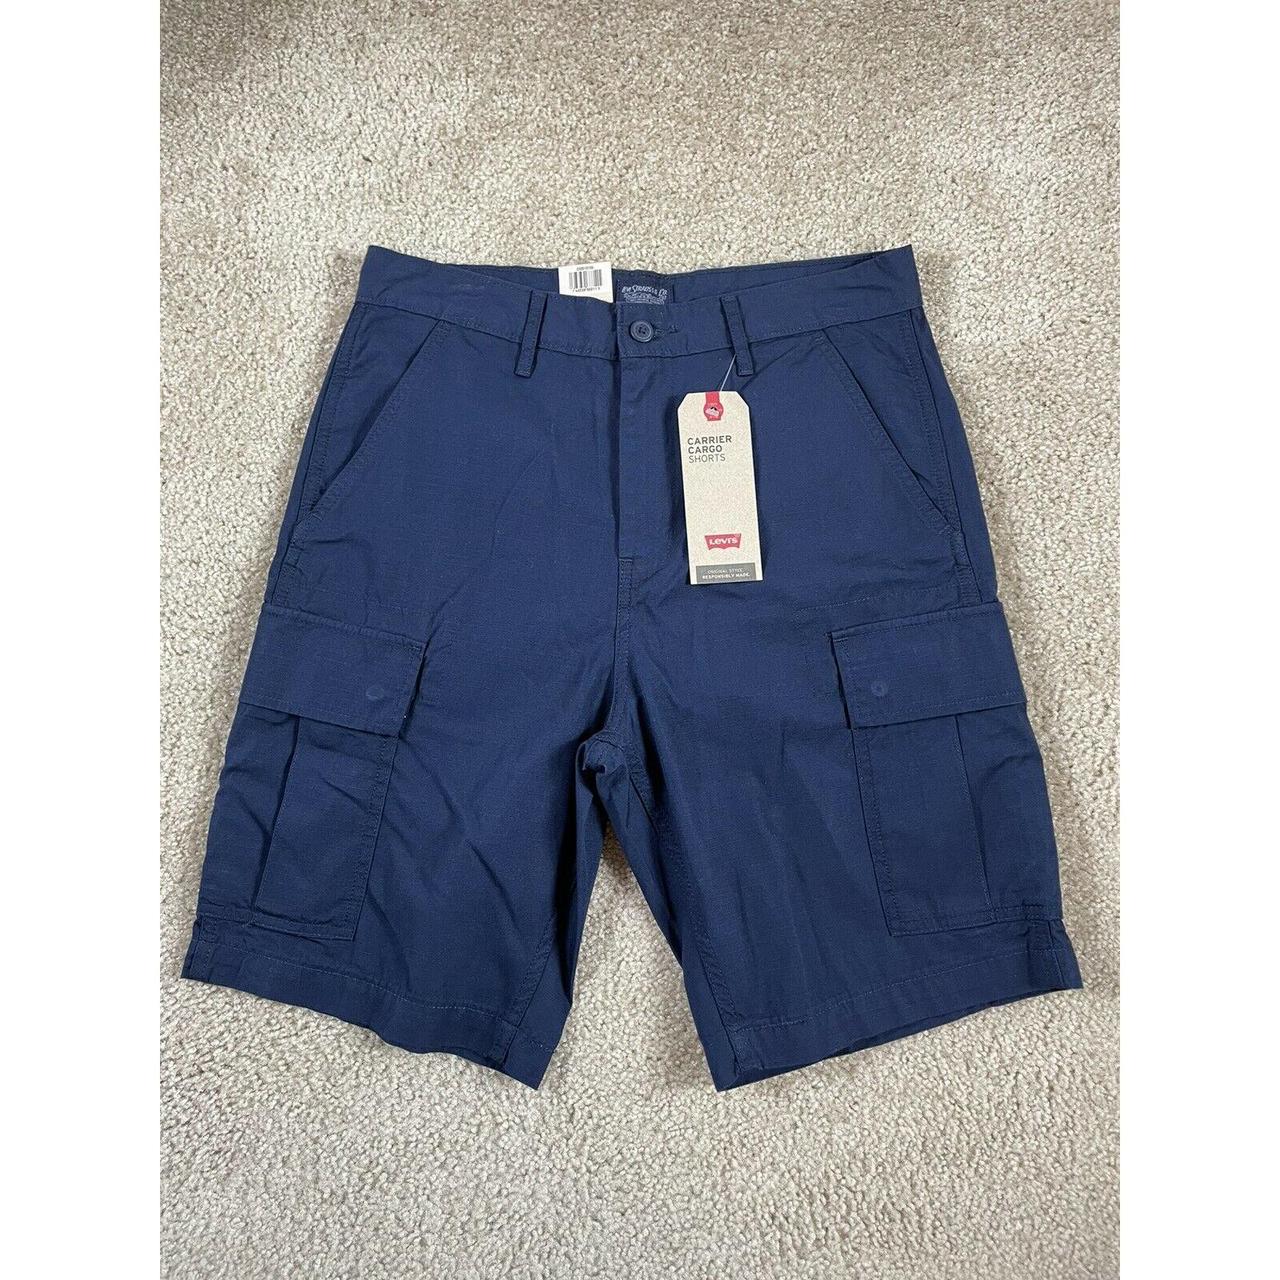 Levi's Men's Navy and Blue Shorts | Depop